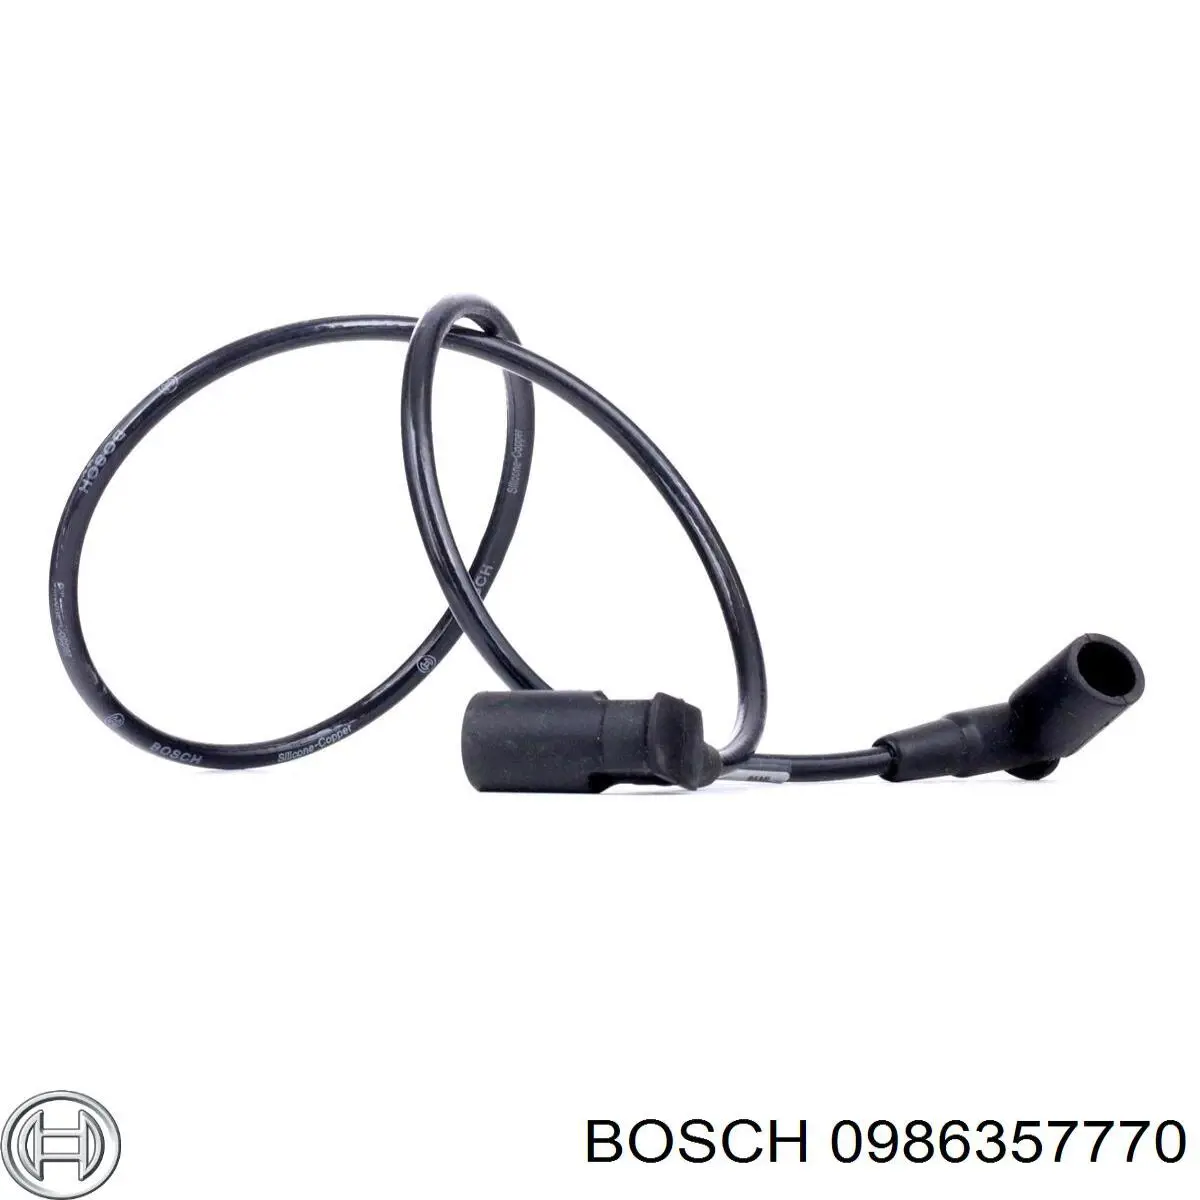 0986357770 Bosch fio central de alta voltagem